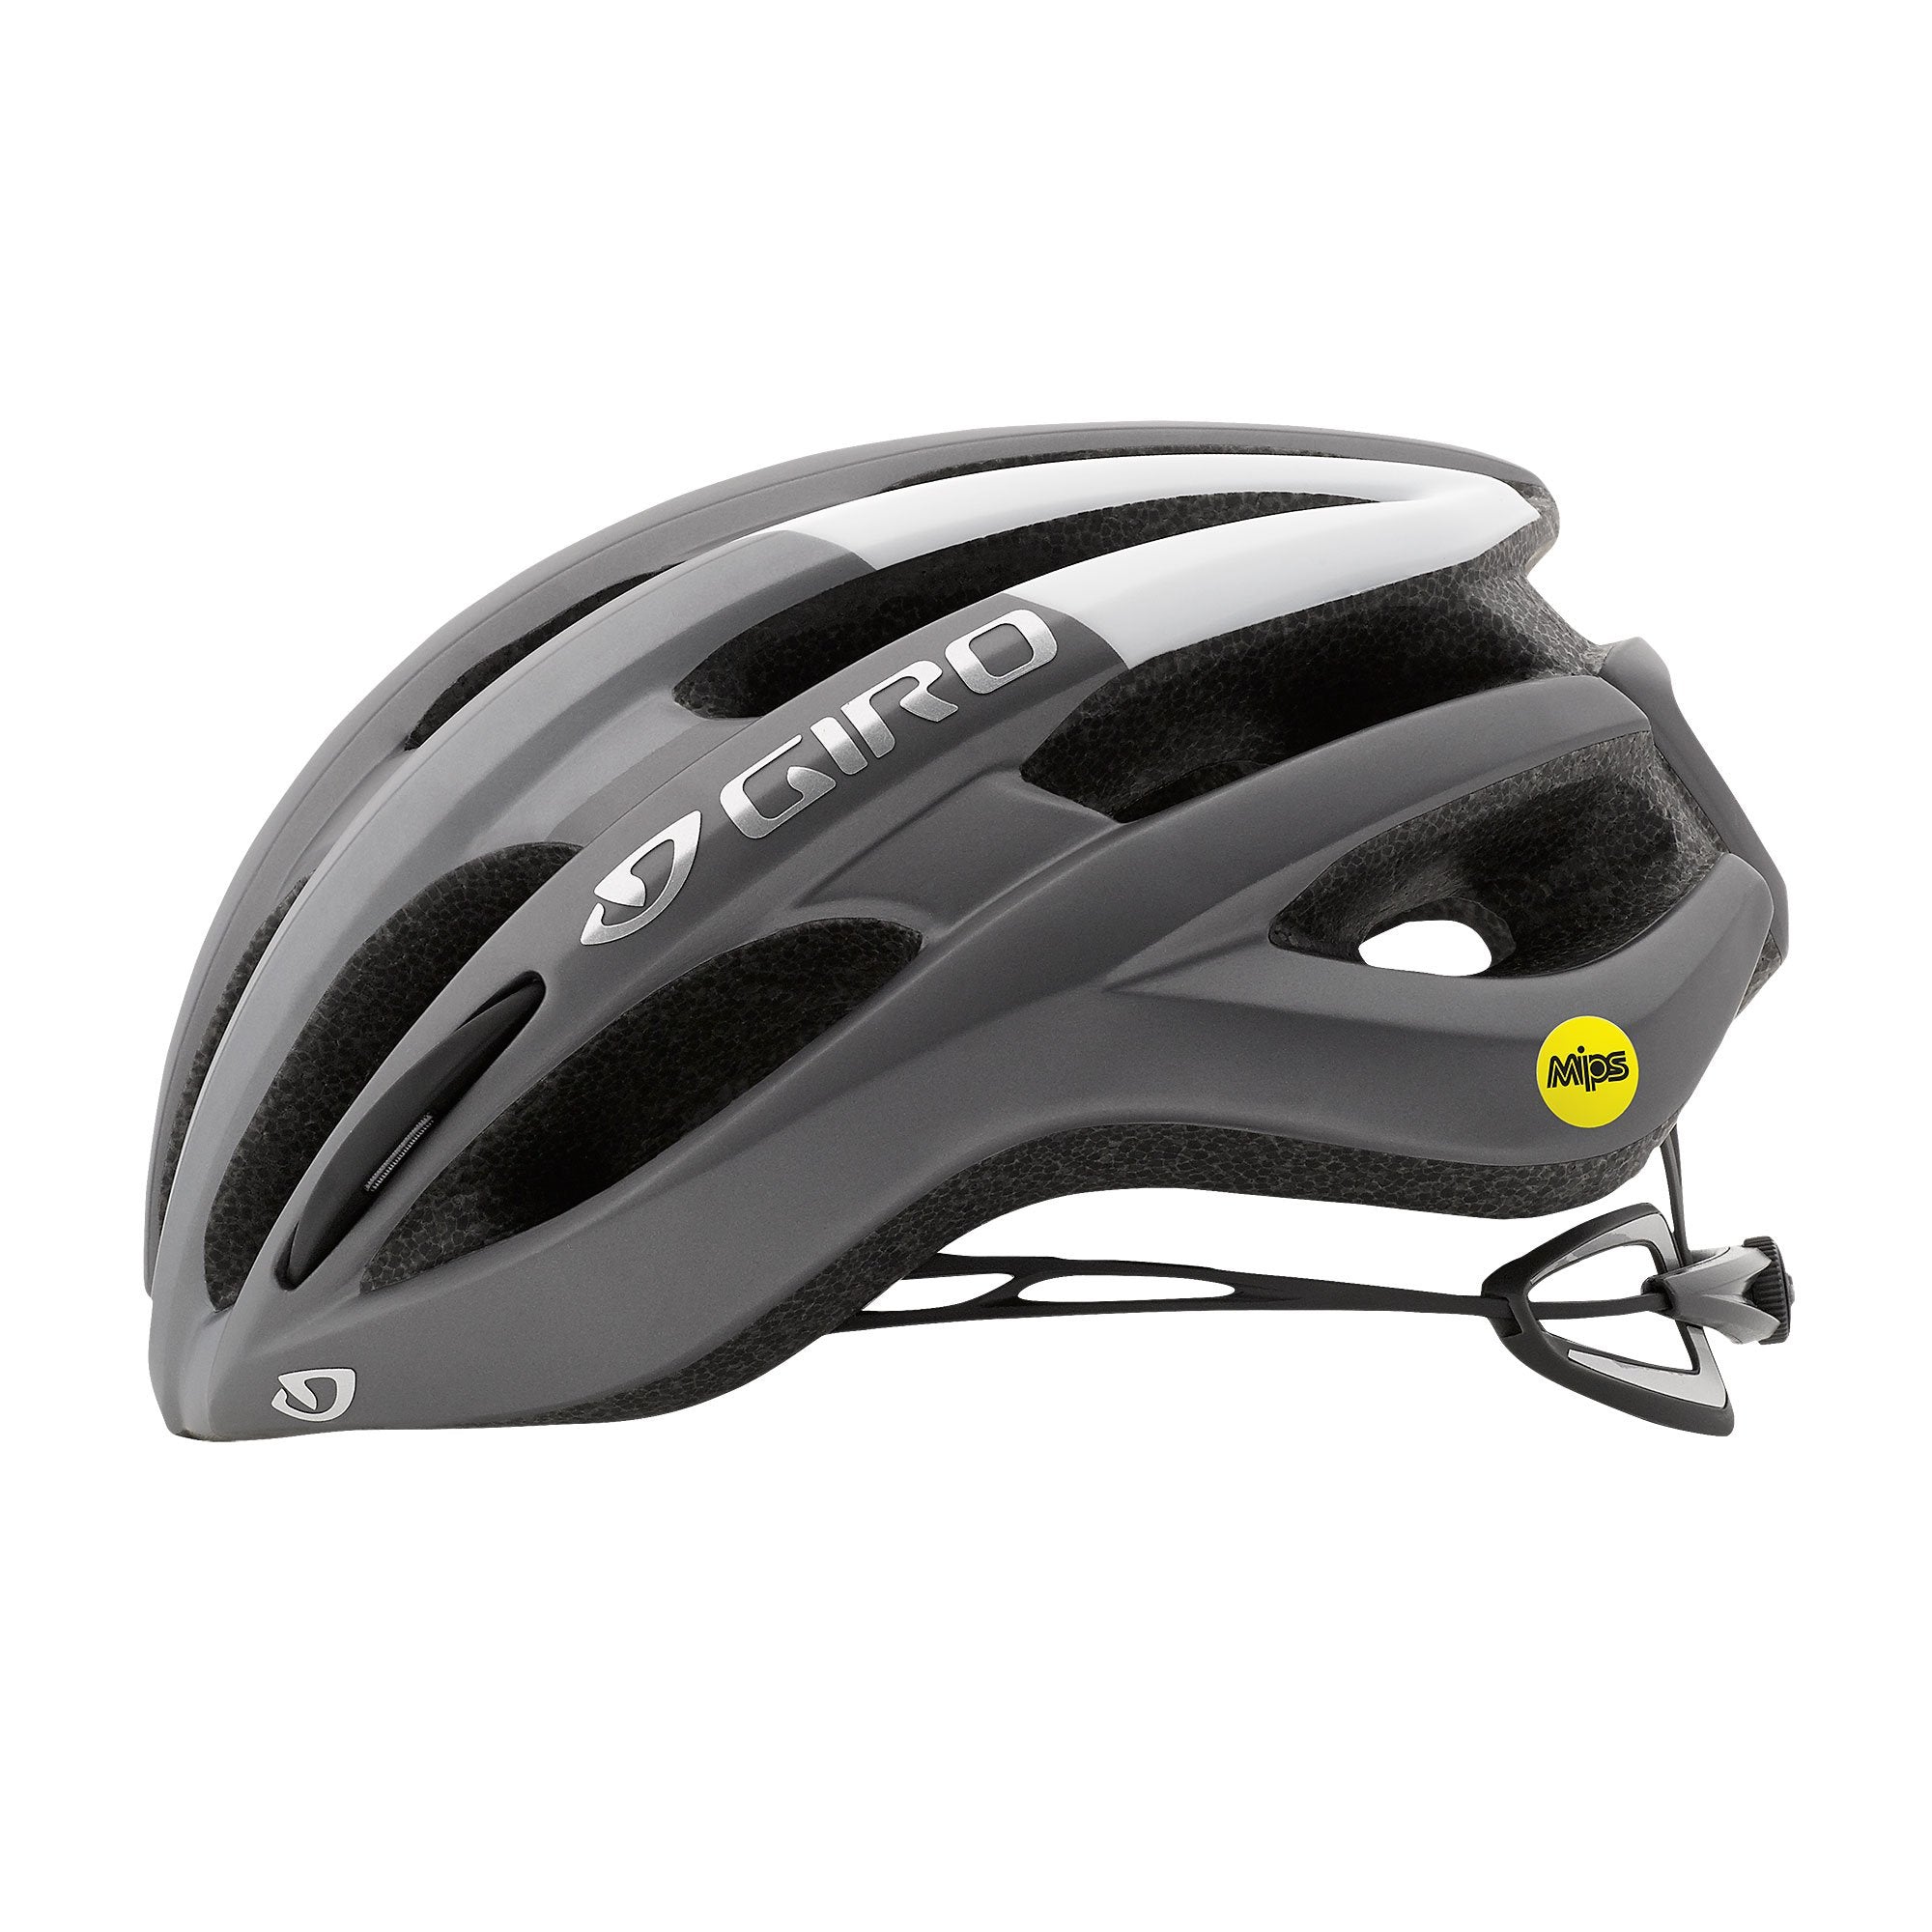 Giro Foray MIPS Adult Road Cycling Helmet - Small (51-55 cm), Matte Titanium/White (2019)  - Like New